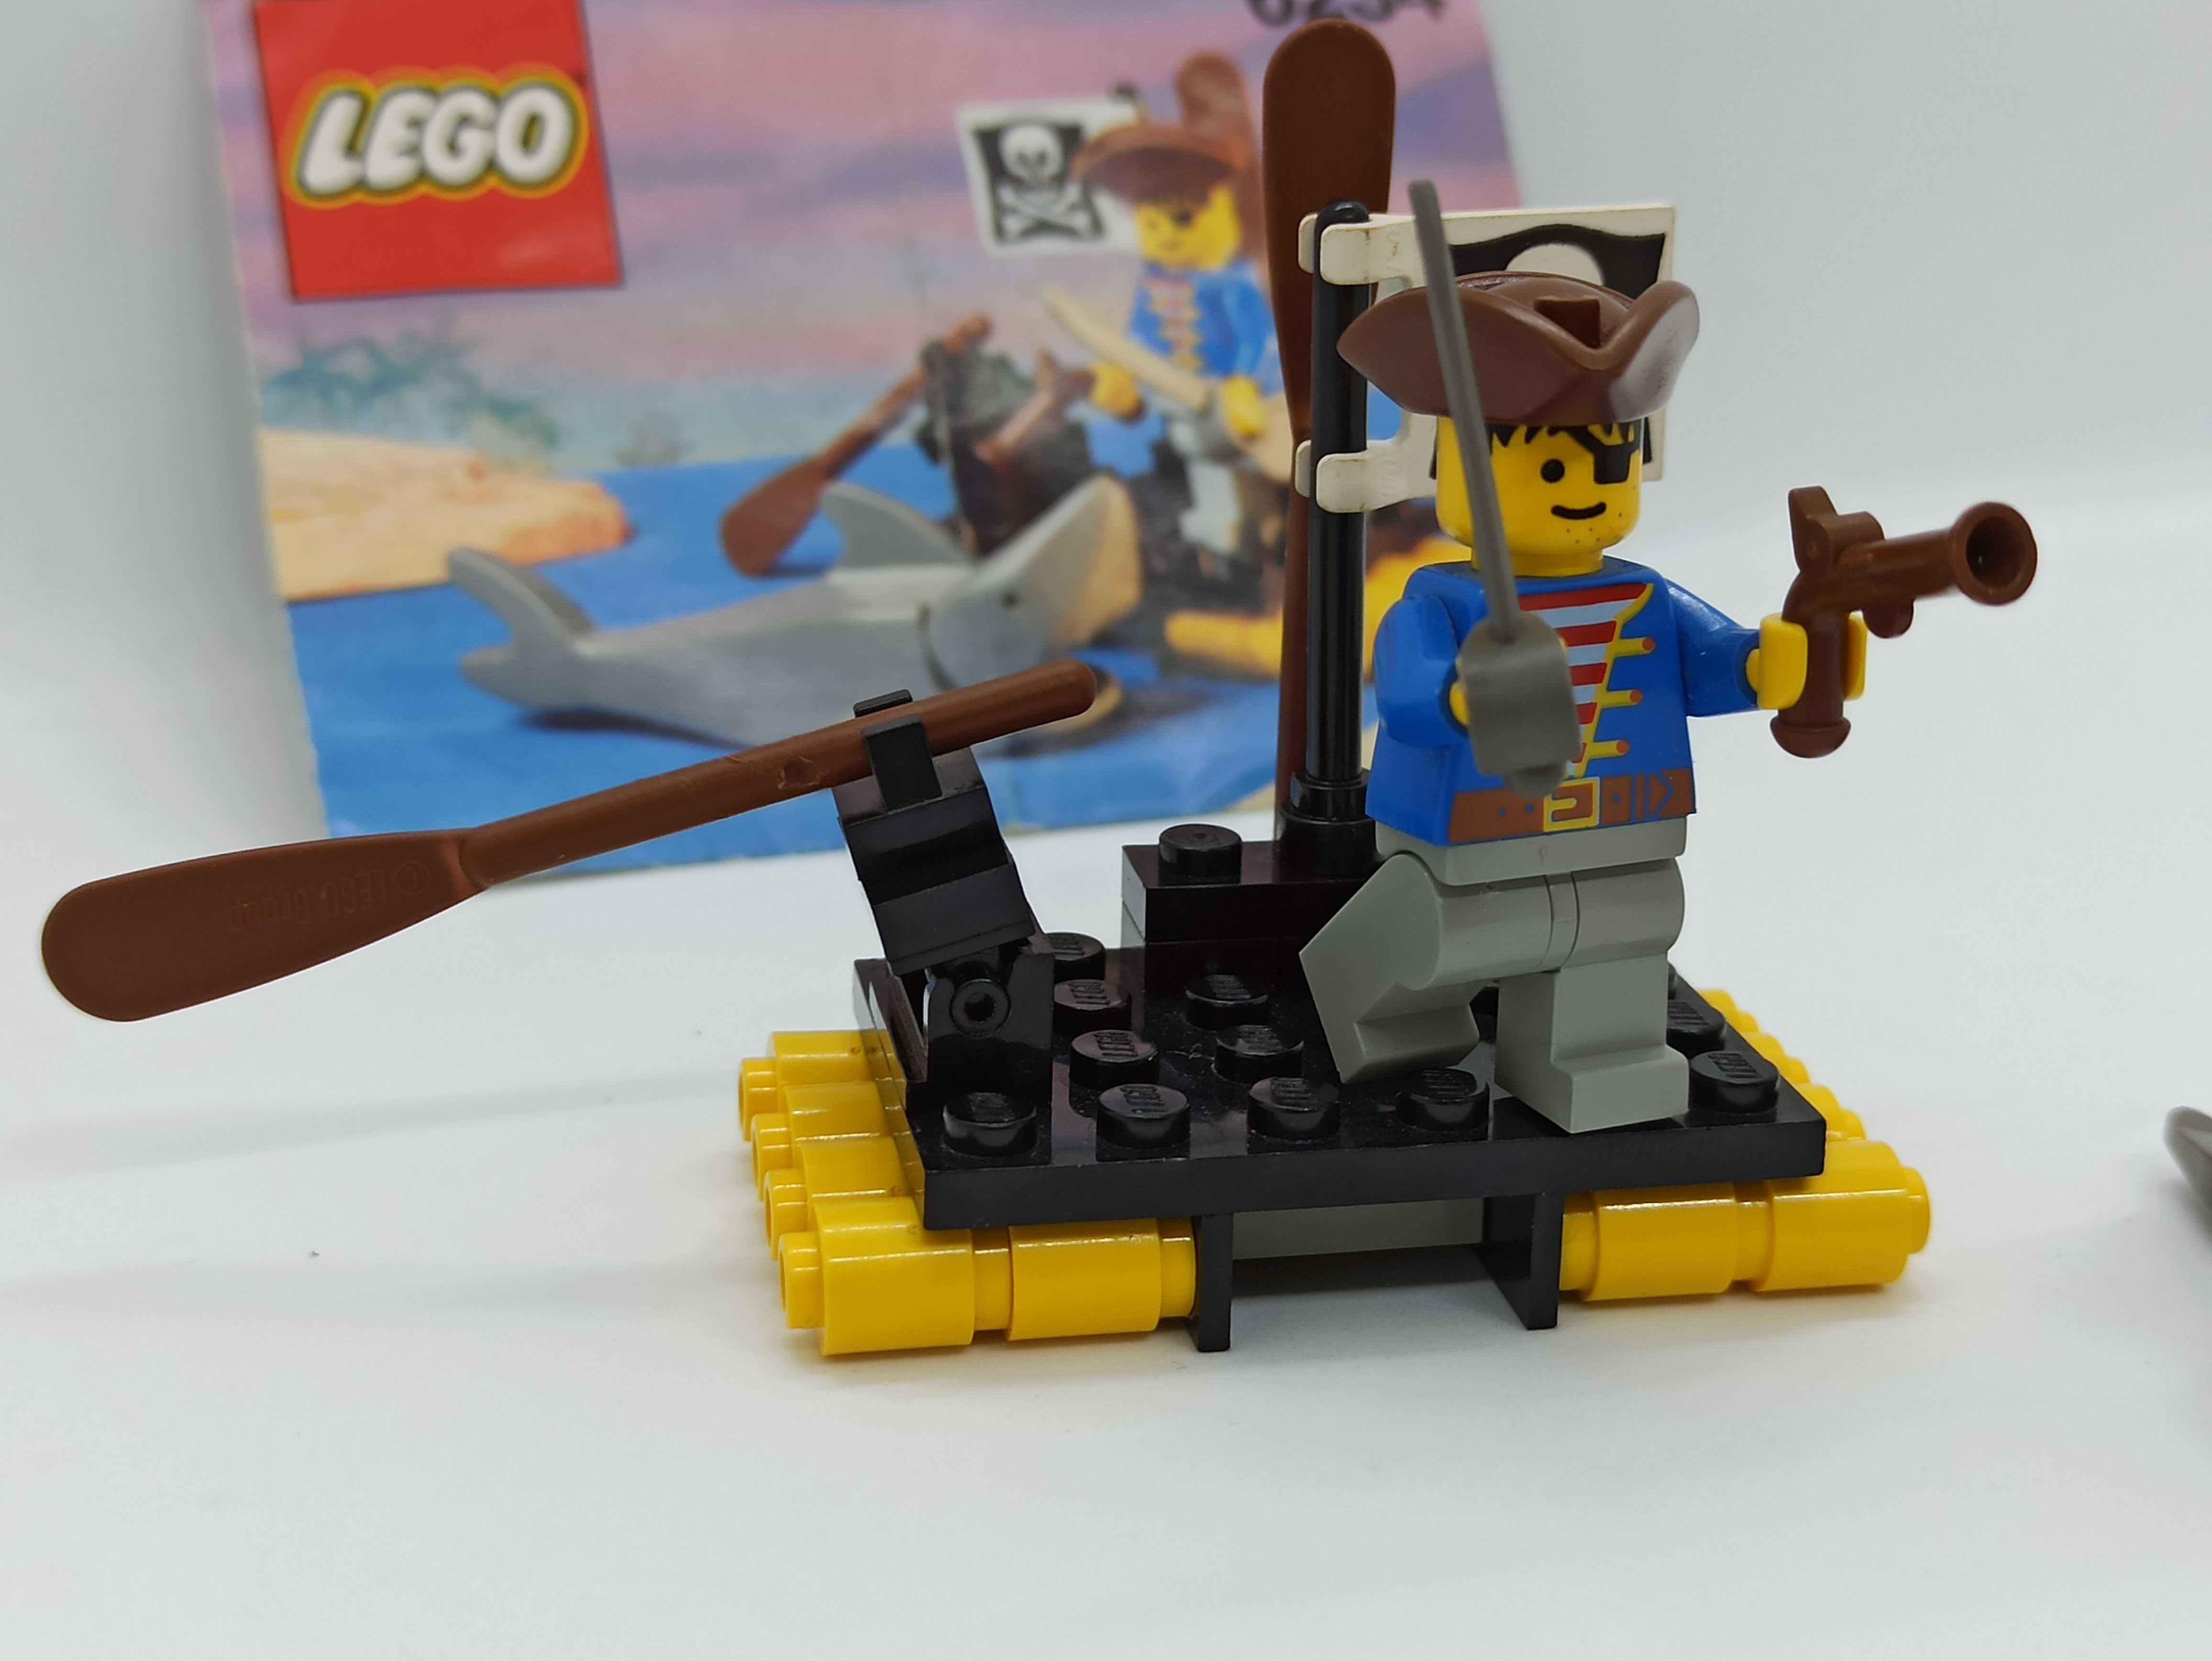 Lego Piraci - 6234 - Renegade's Raft